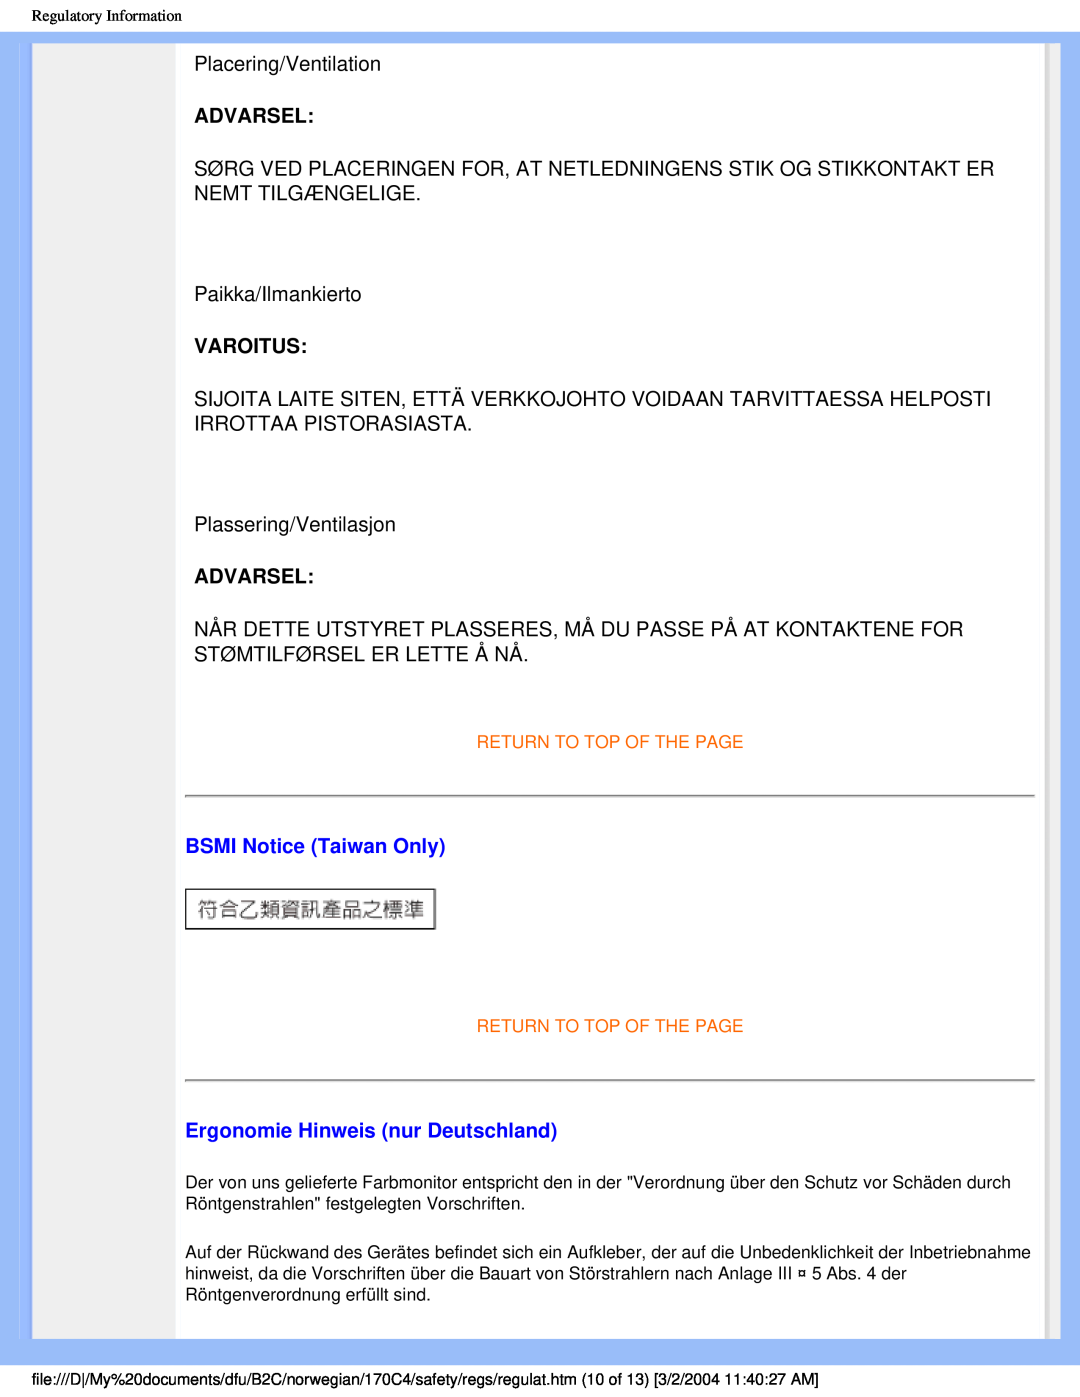 Philips 170C4 user manual Advarsel, Varoitus, BSMI Notice Taiwan Only, Ergonomie Hinweis nur Deutschland 